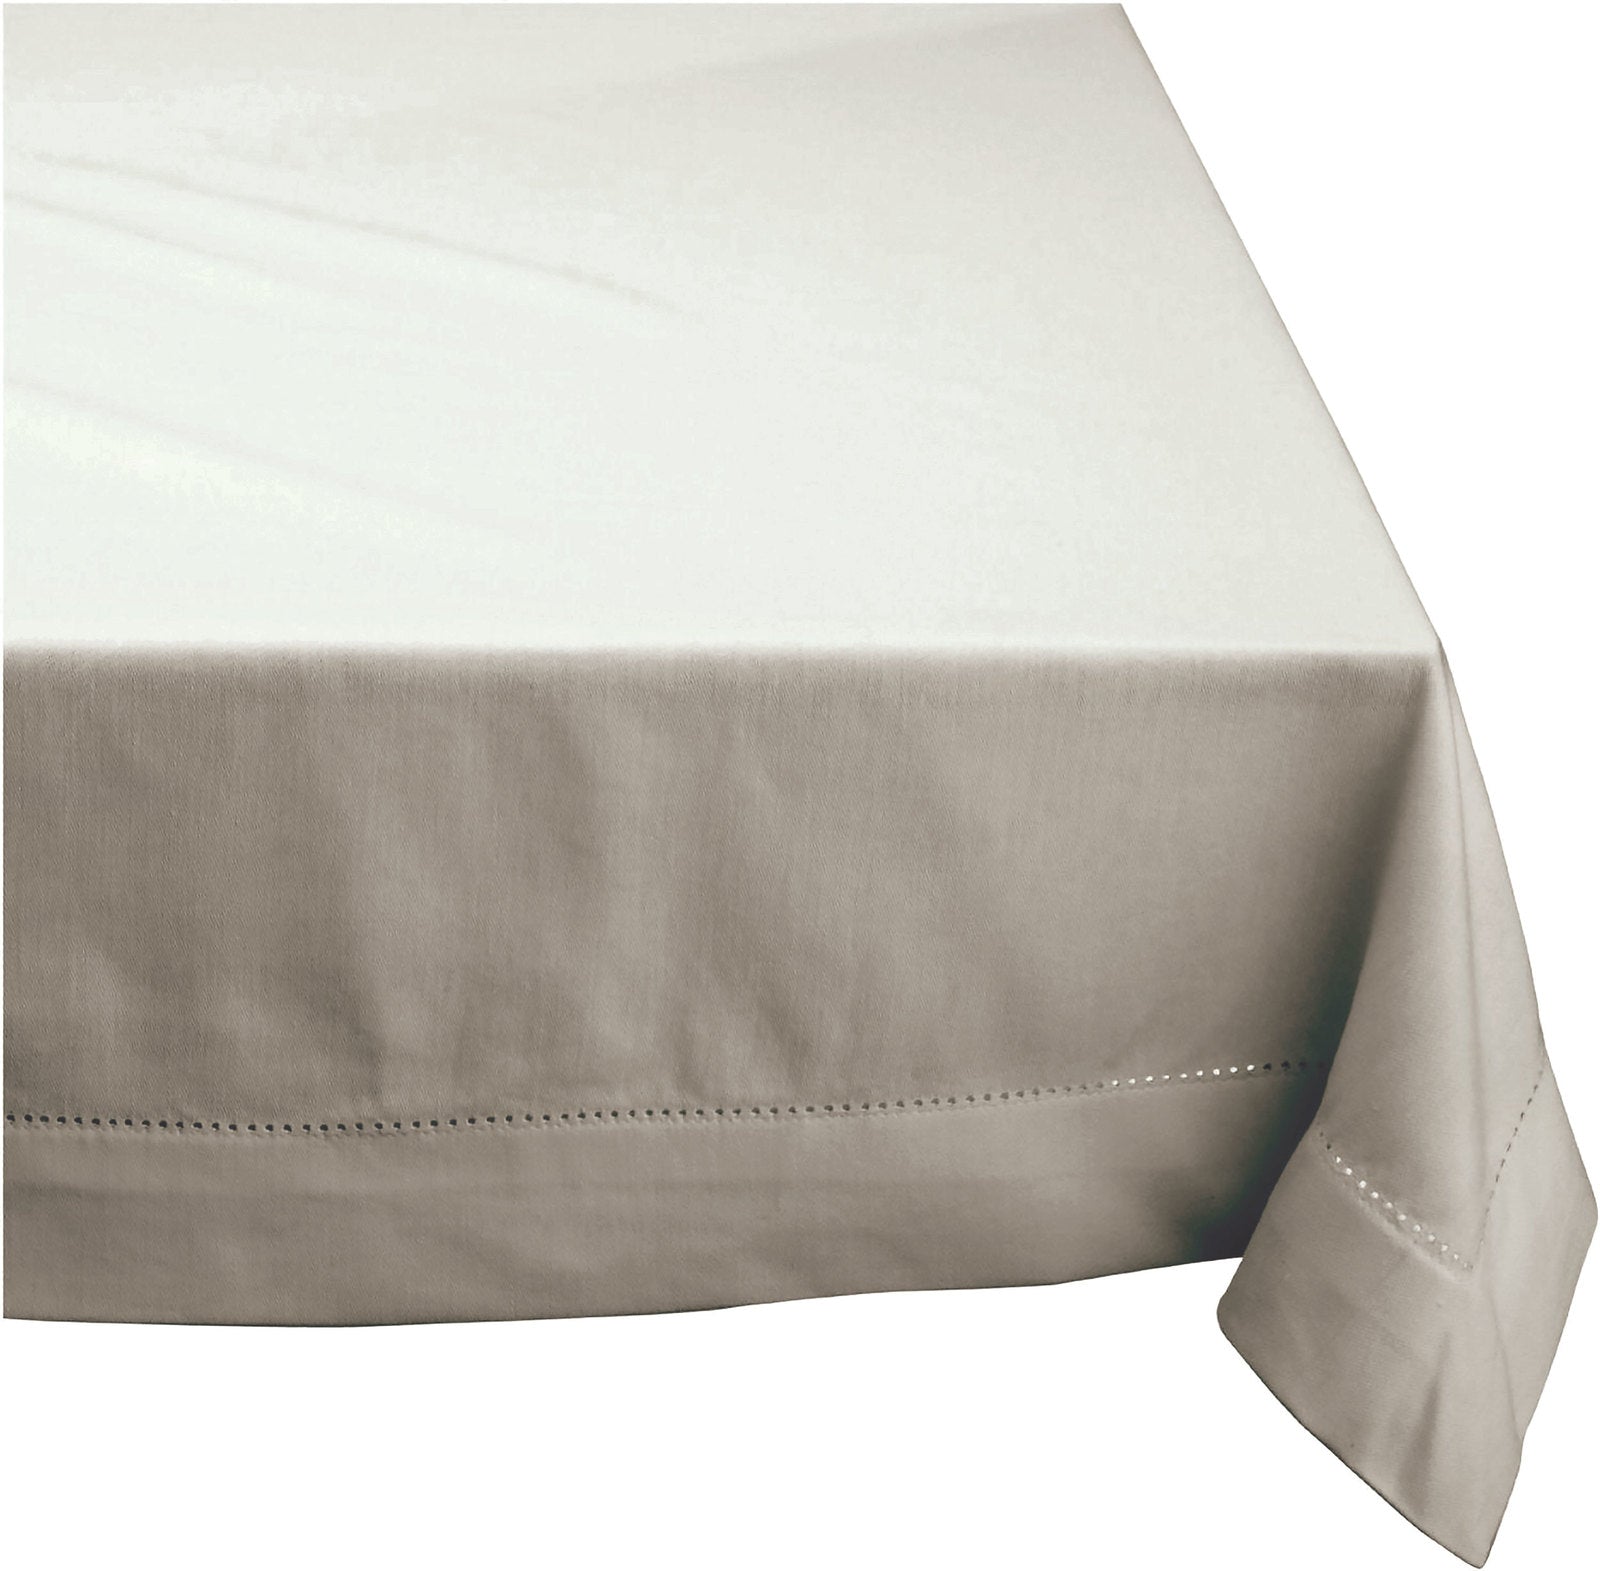 Elegant Hemstitch Tablecloth - 100% Cotton - 150x300cm in Oatmeal